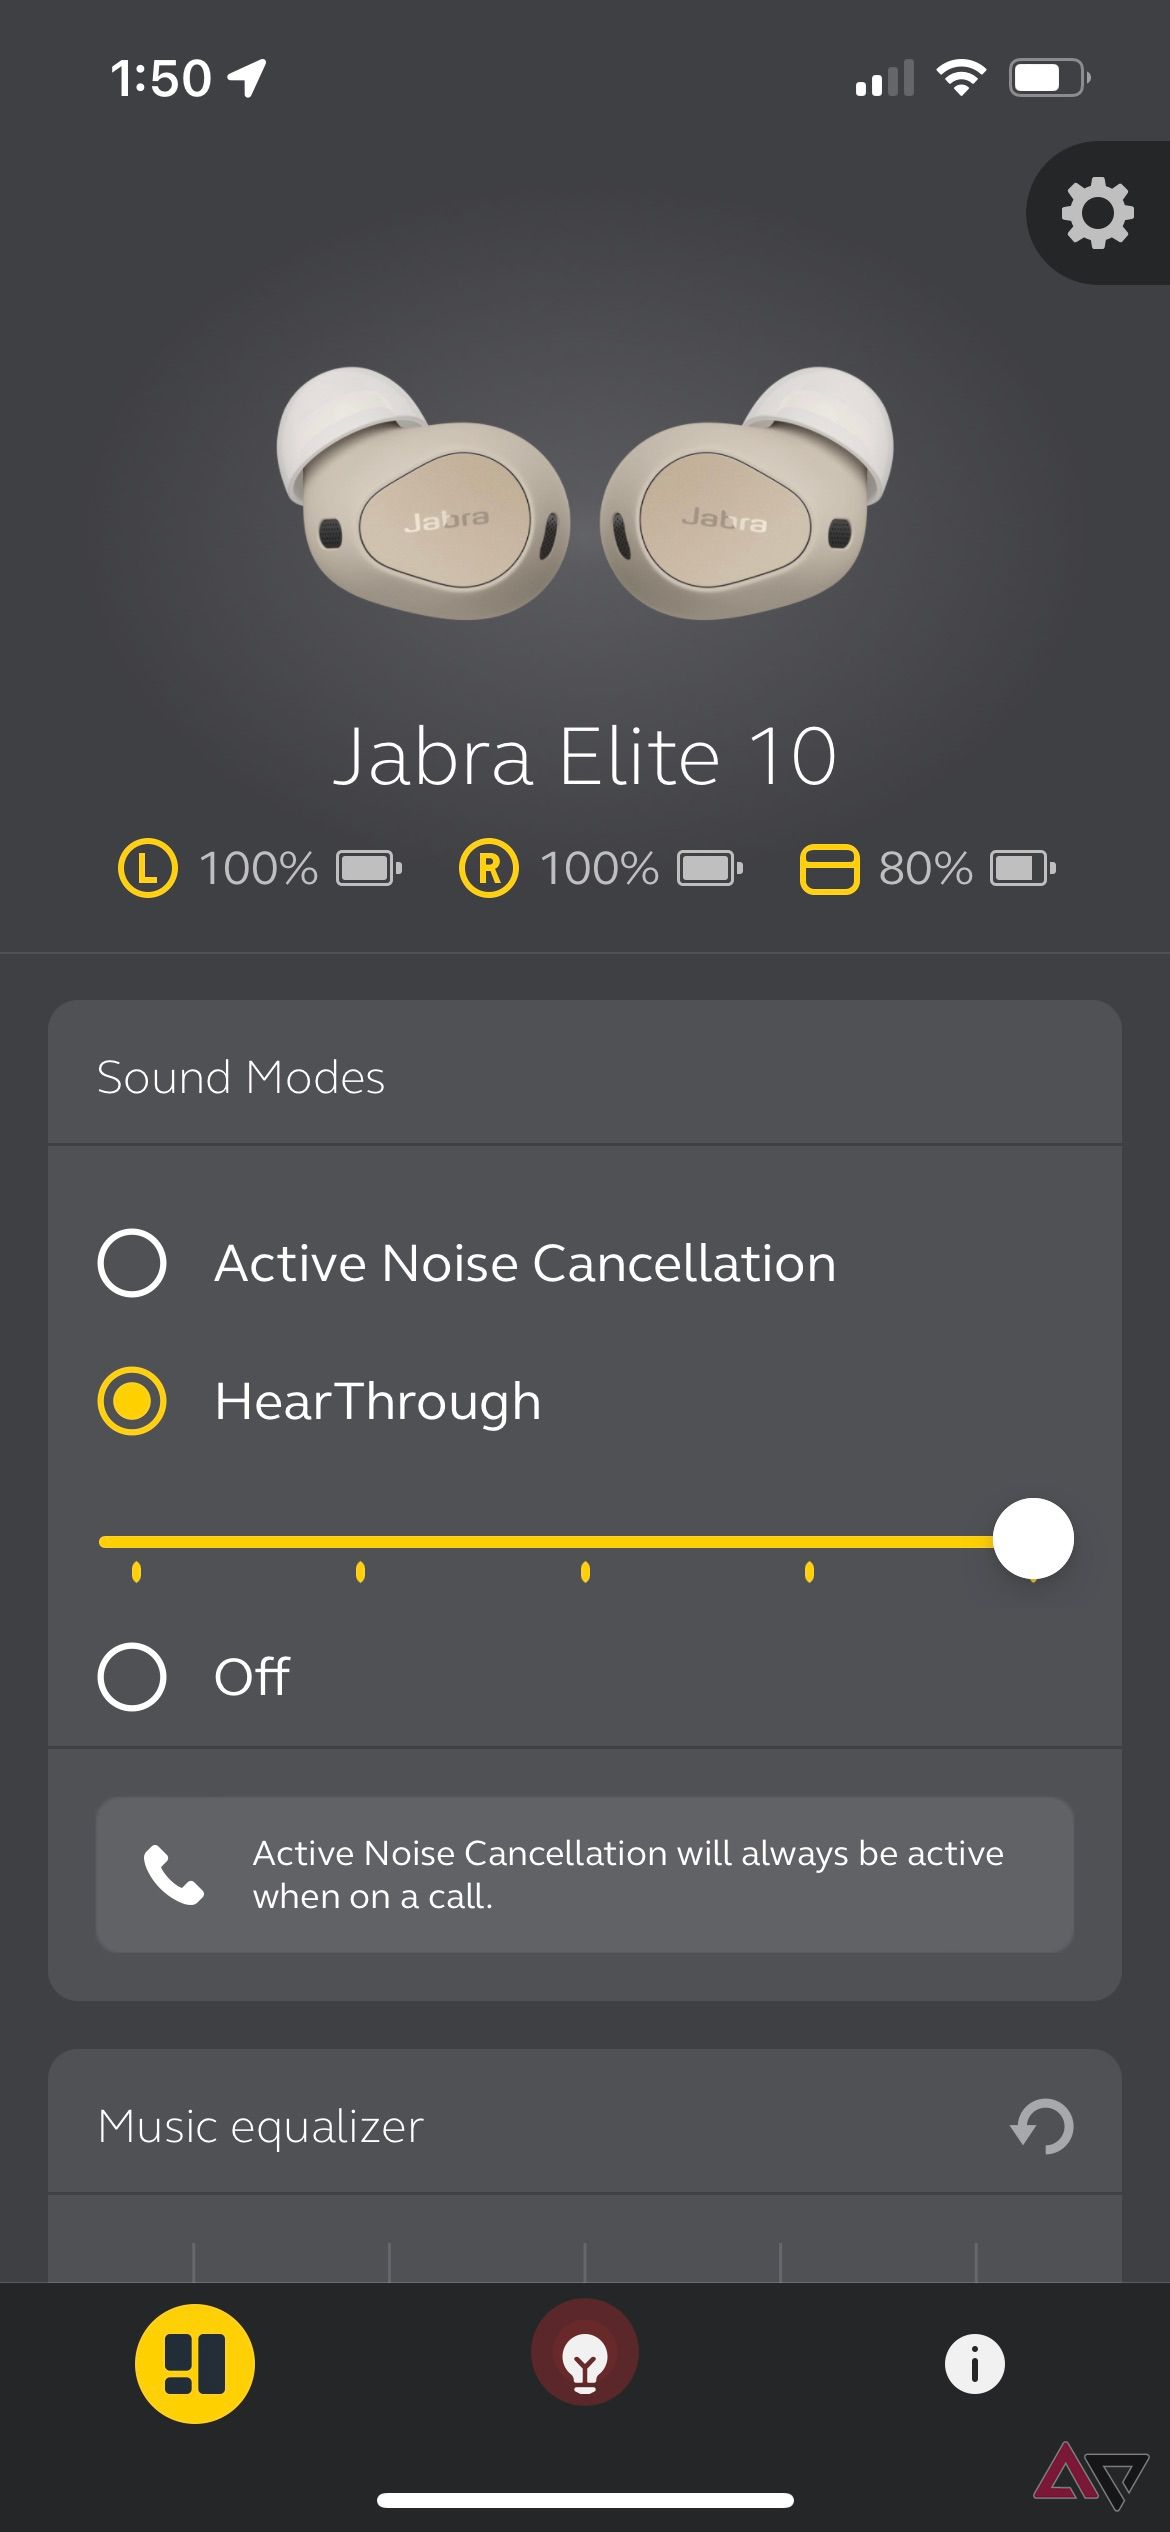 Jabra Elite 10 earbuds review: Comfort is king